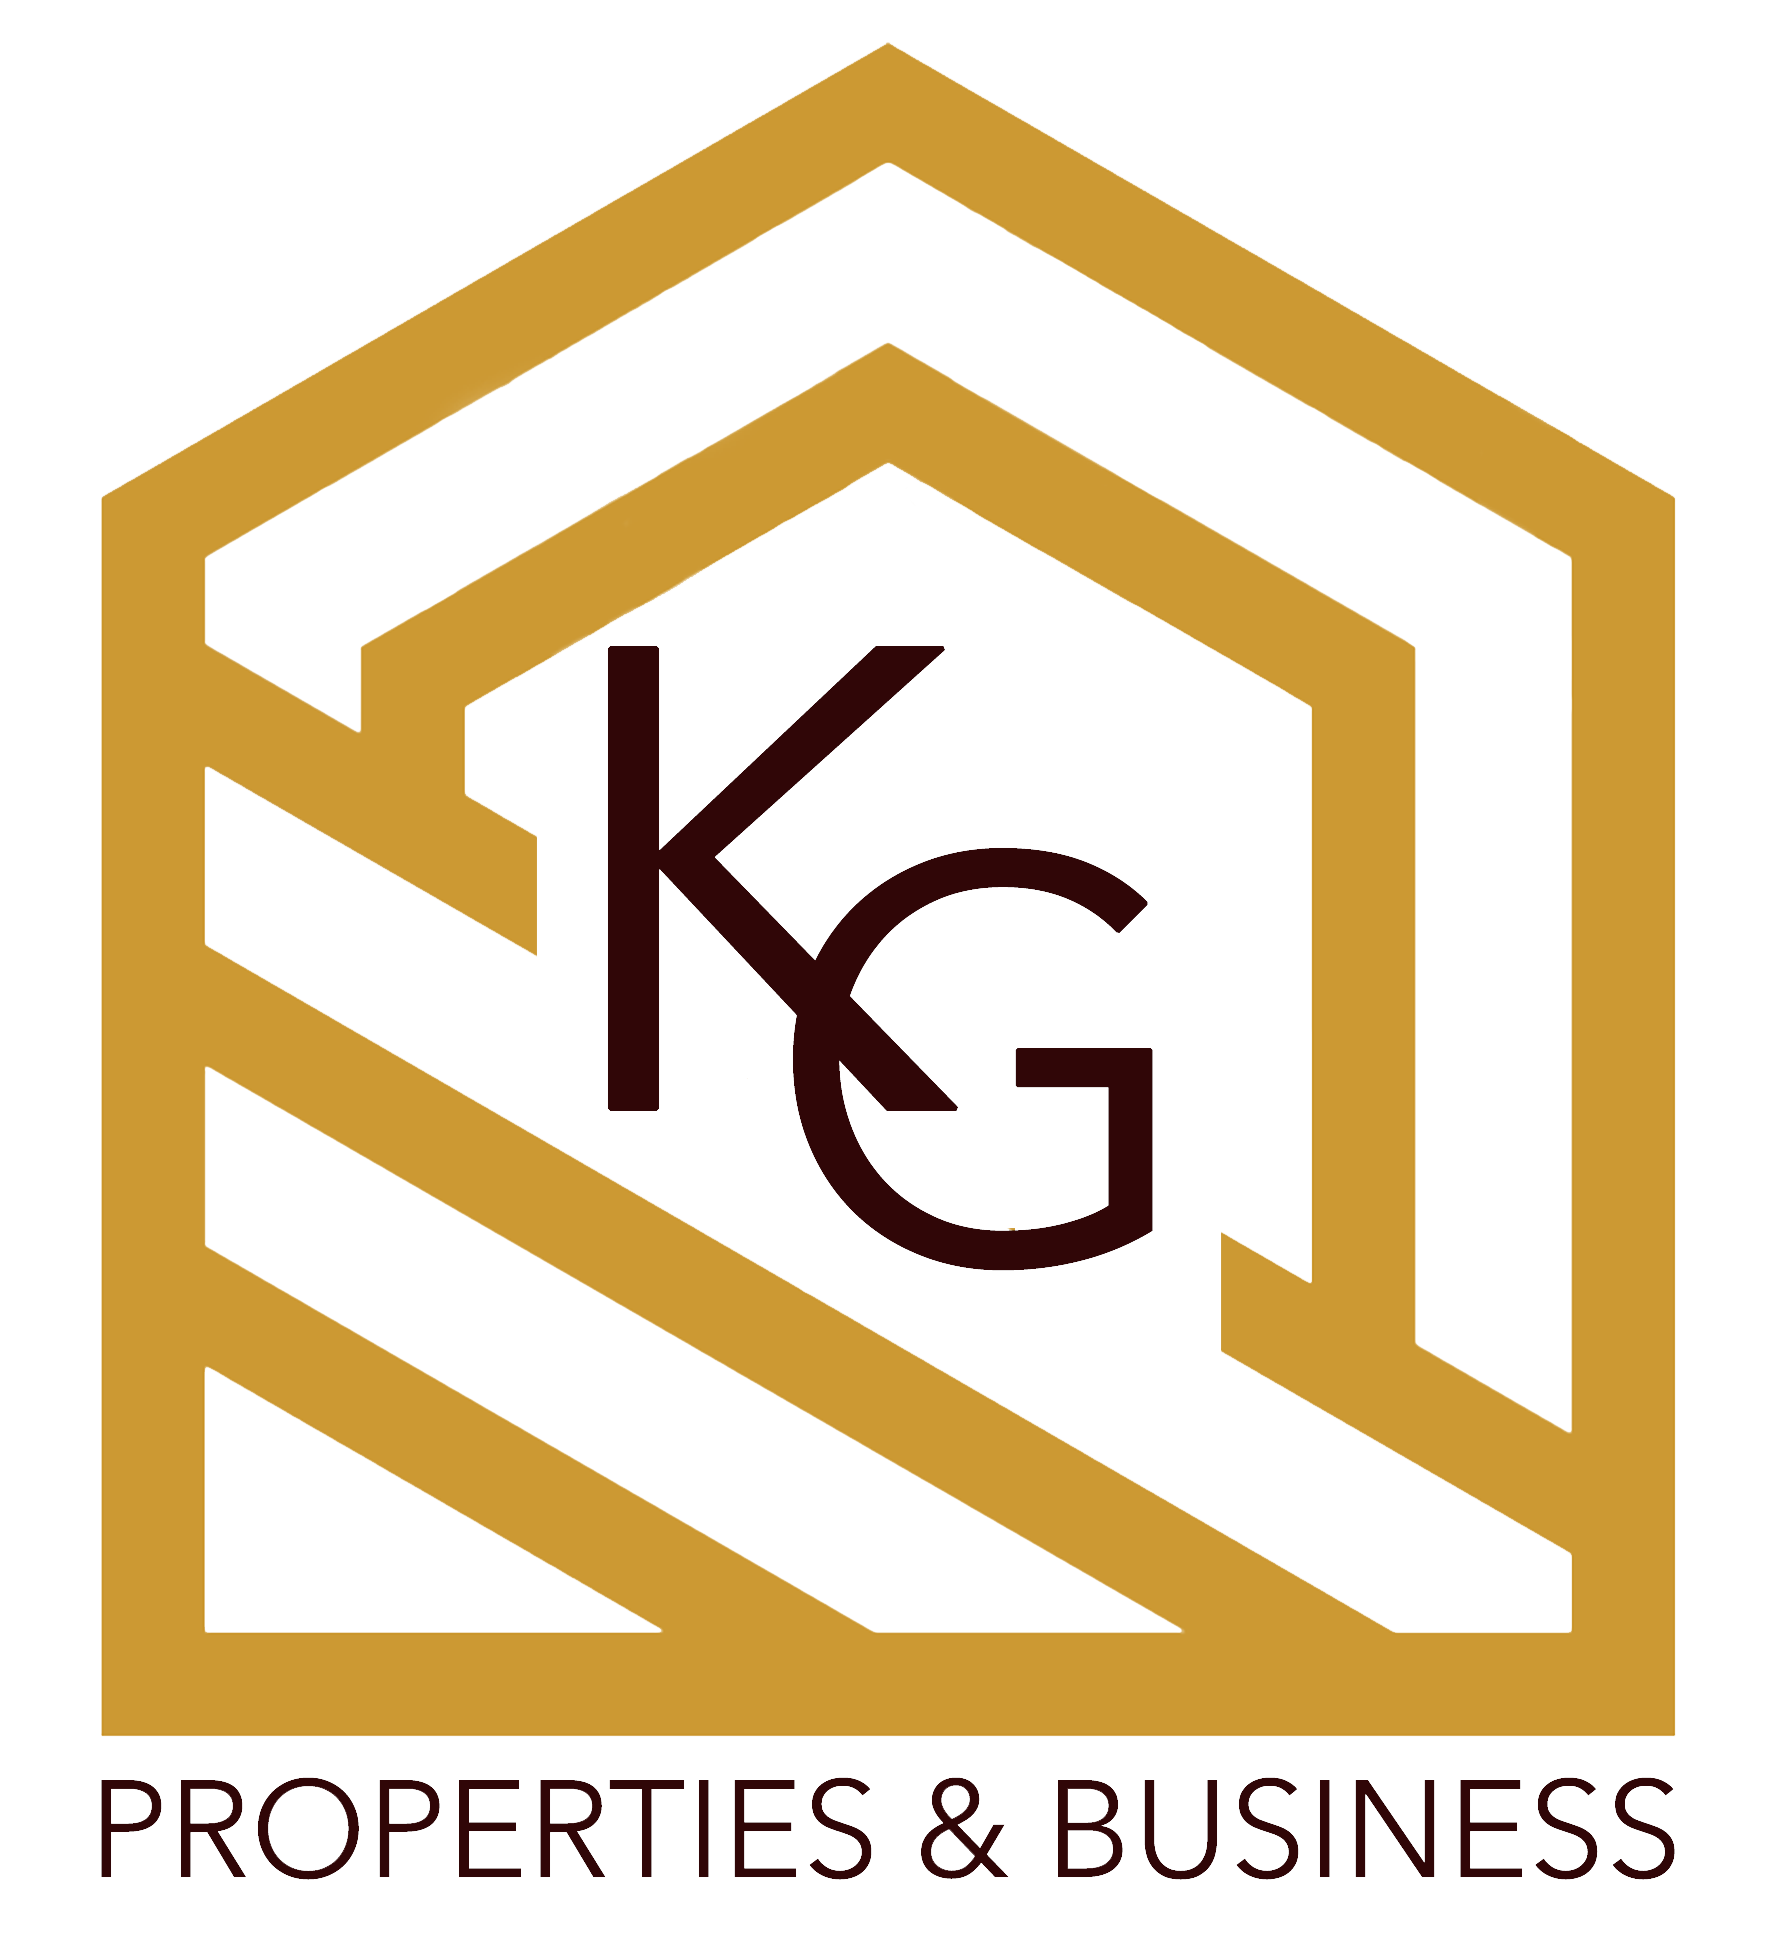 KG International Properties